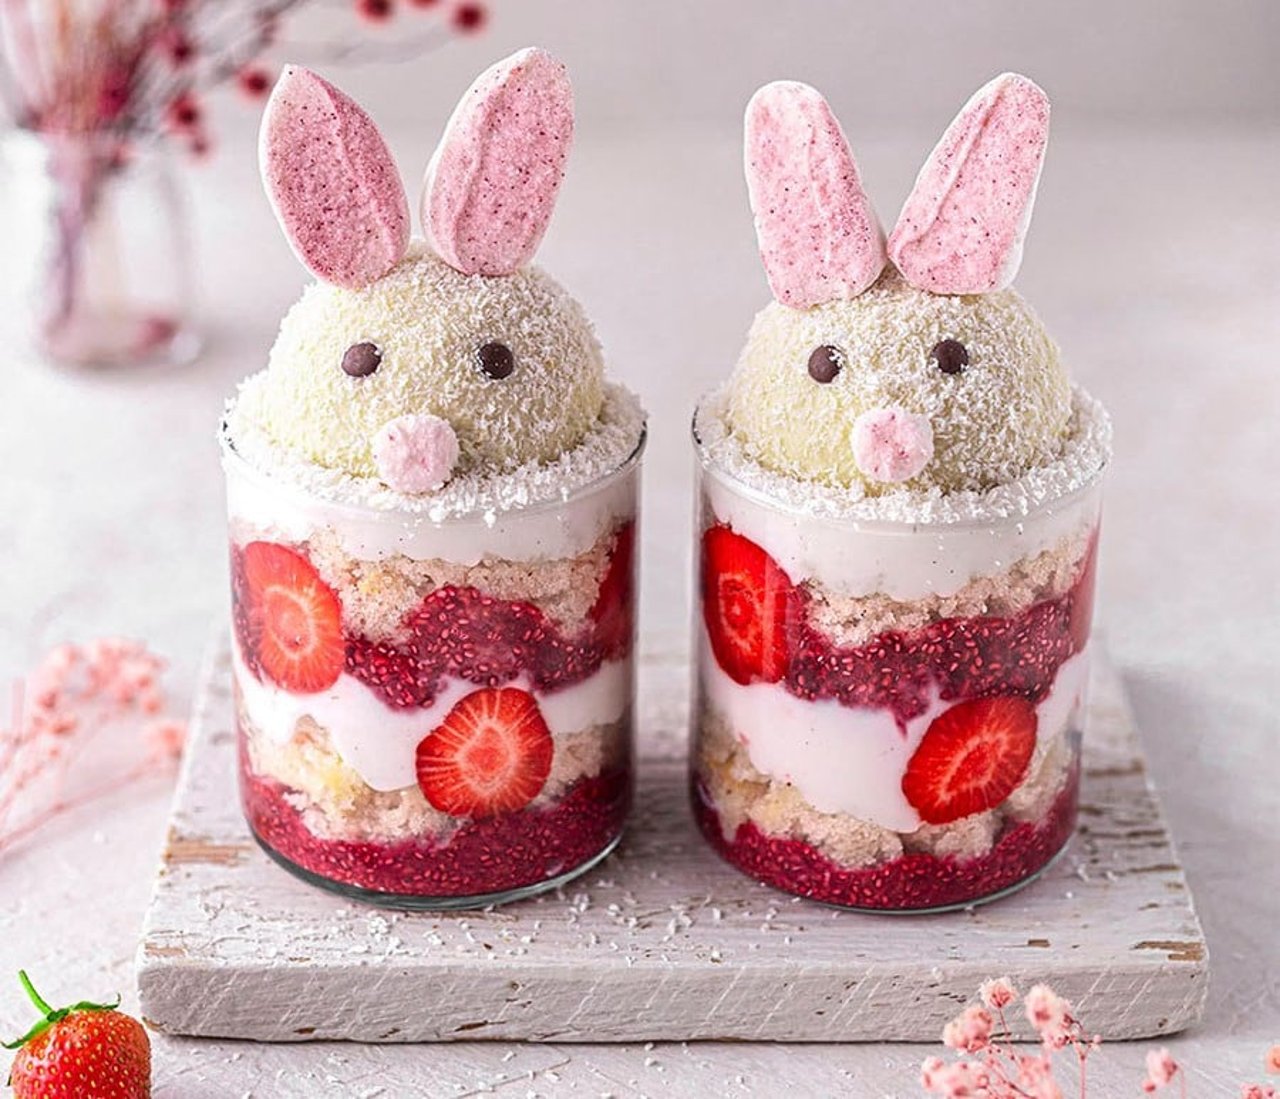 Vegan easter bunny trifles Image credit: Rainbow Nourishments